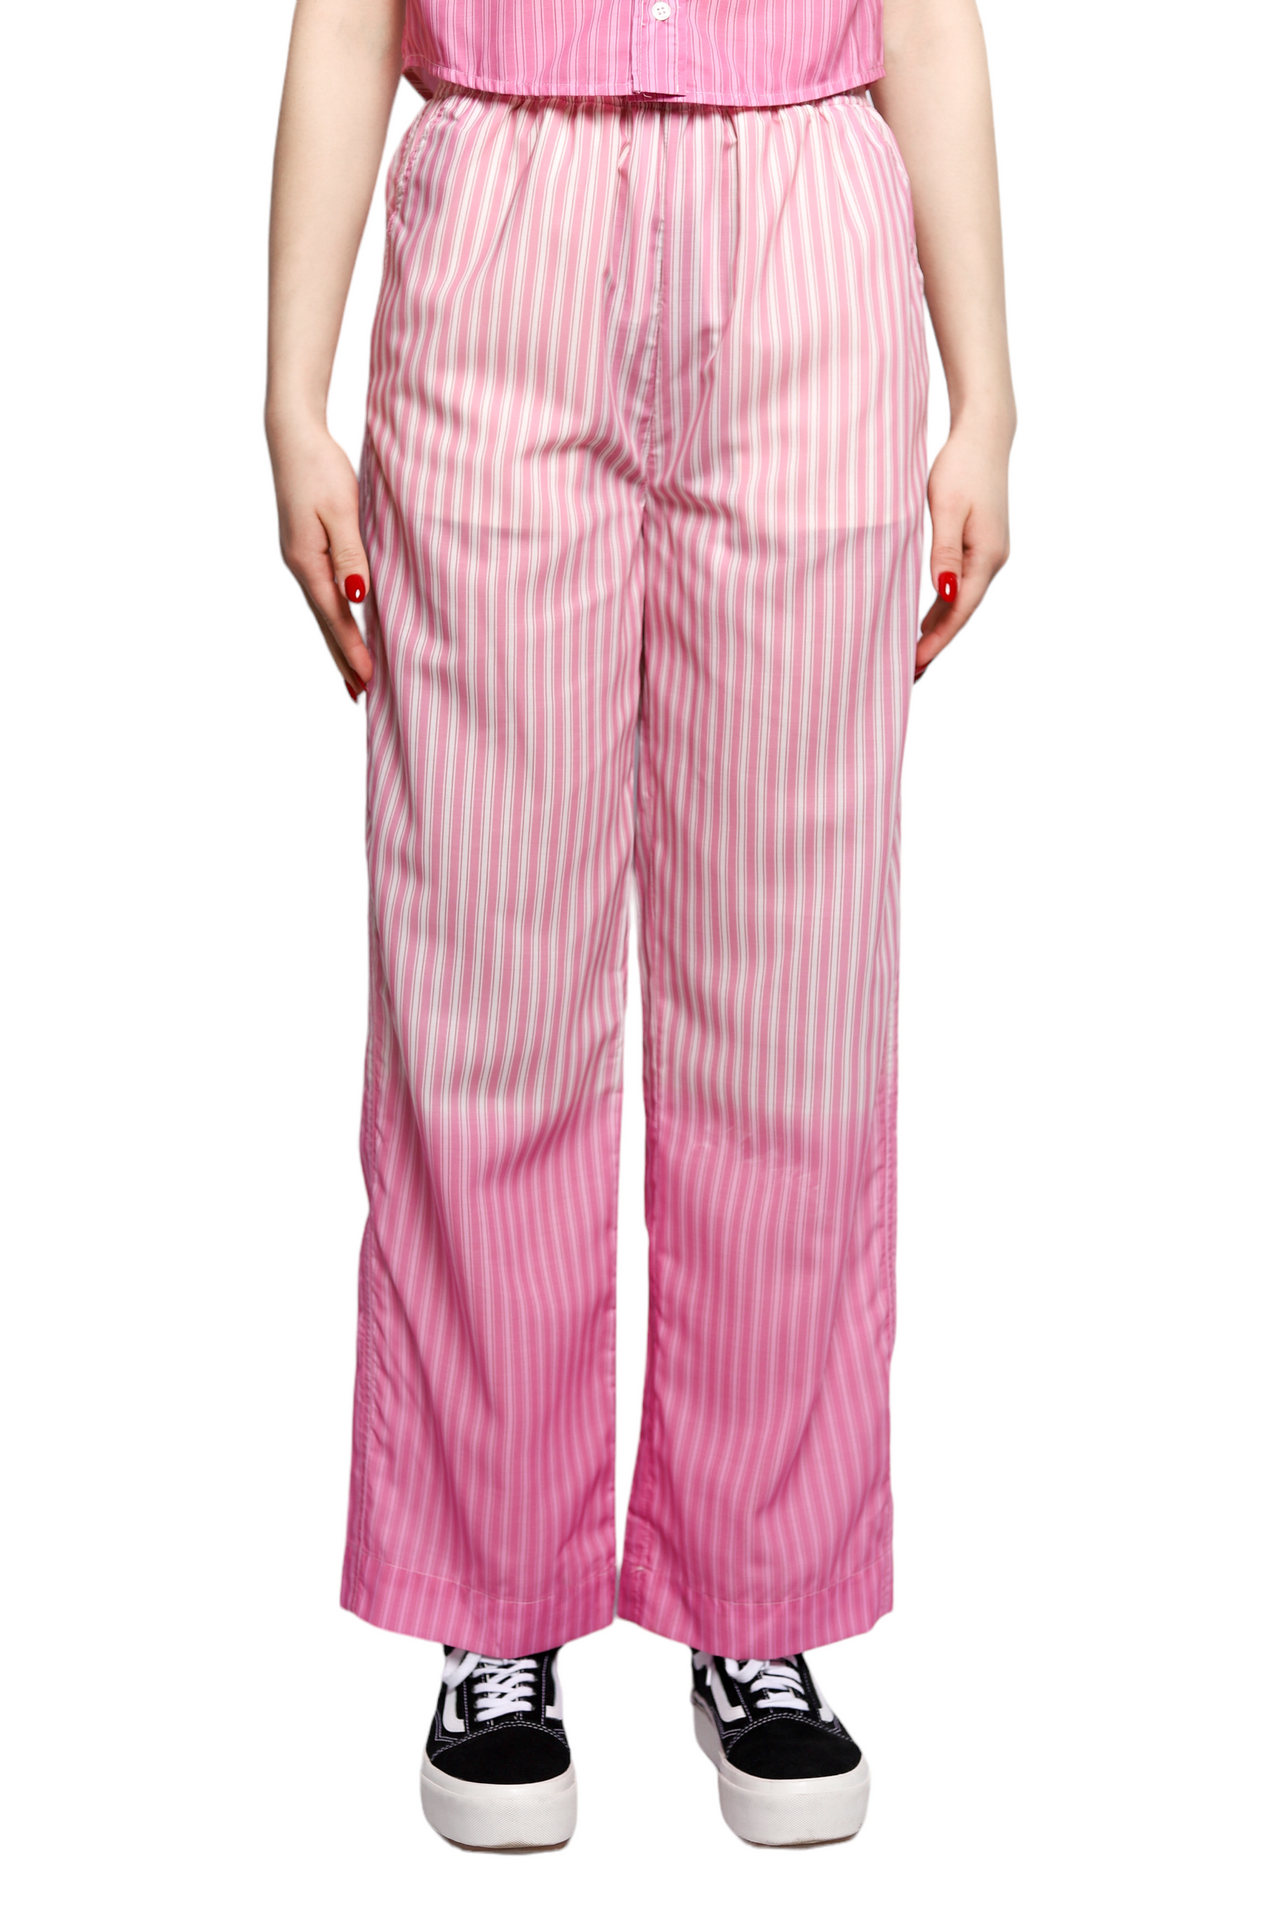 Marni Dip Dyed Cotton Pants Striped Pink